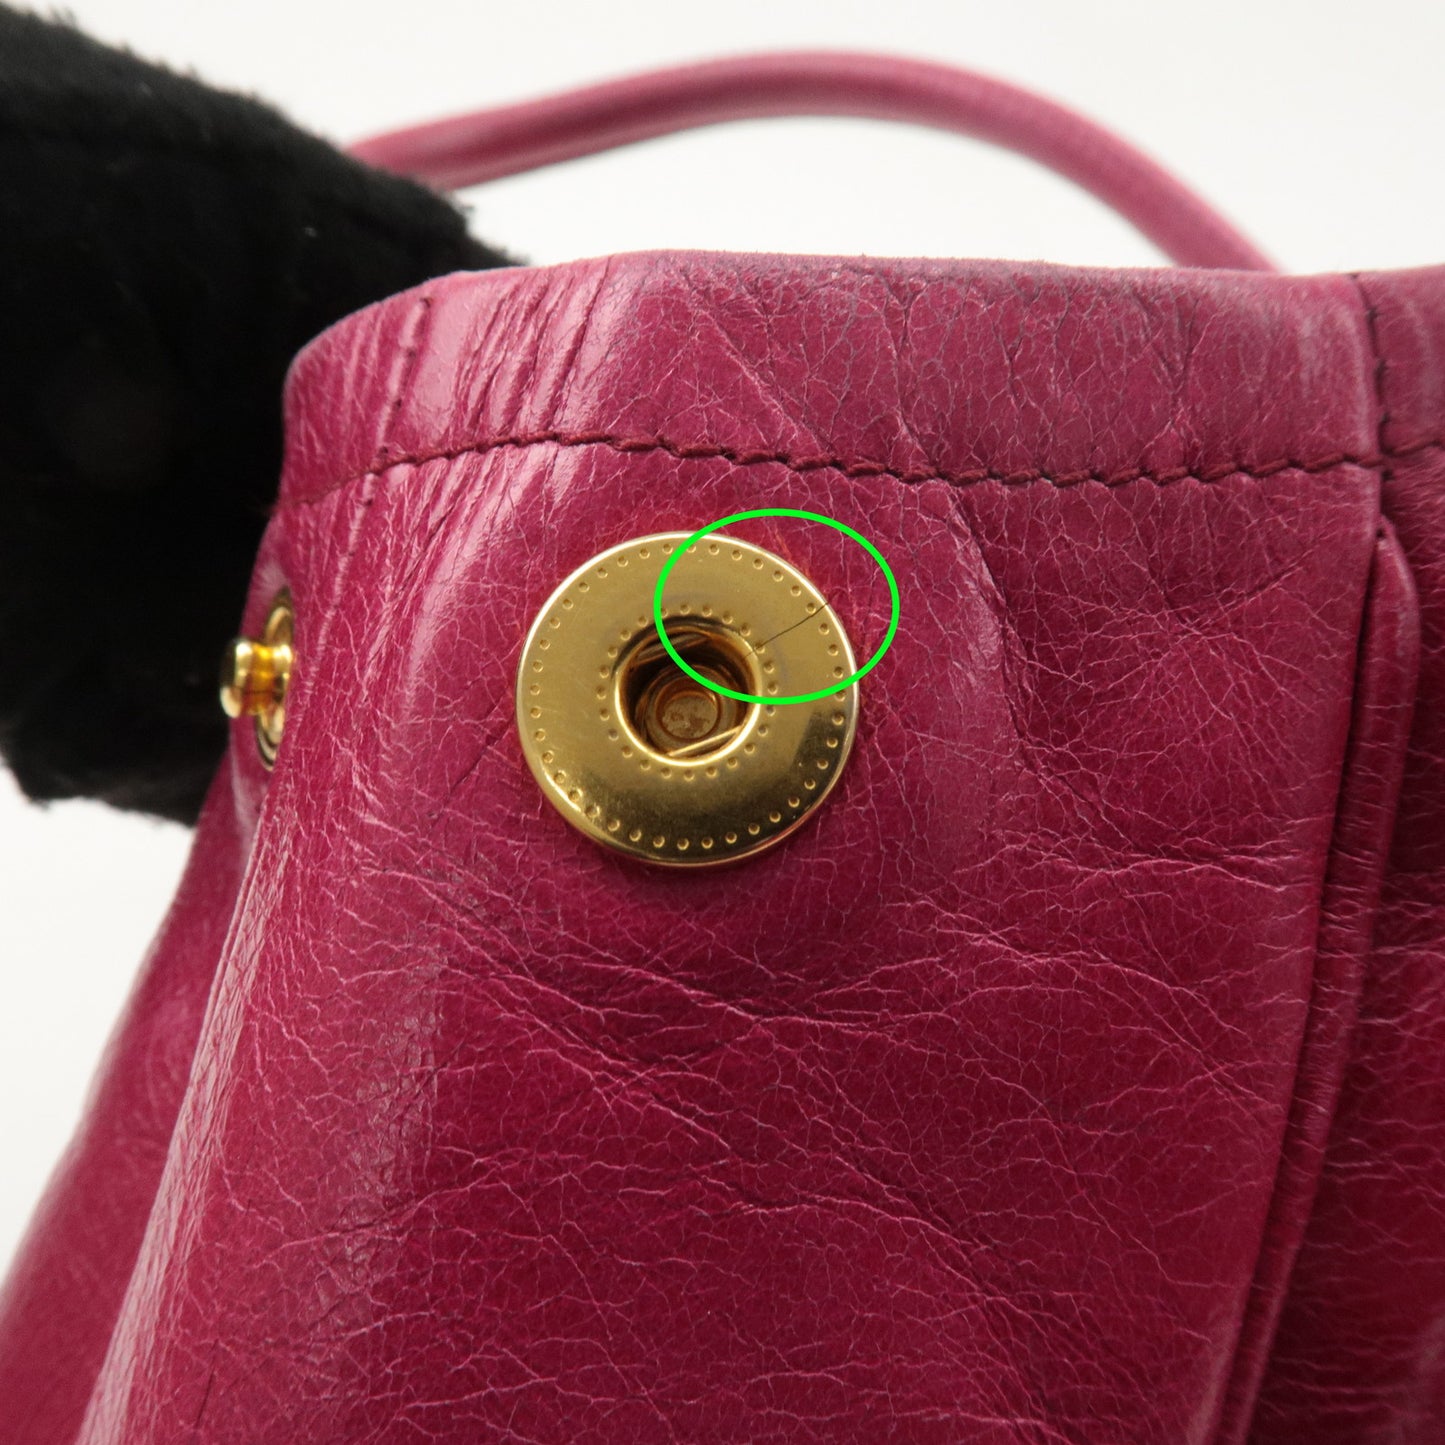 MIU MIU Leather 2WAY Bag Hand Bag Shoulder Bag Pink